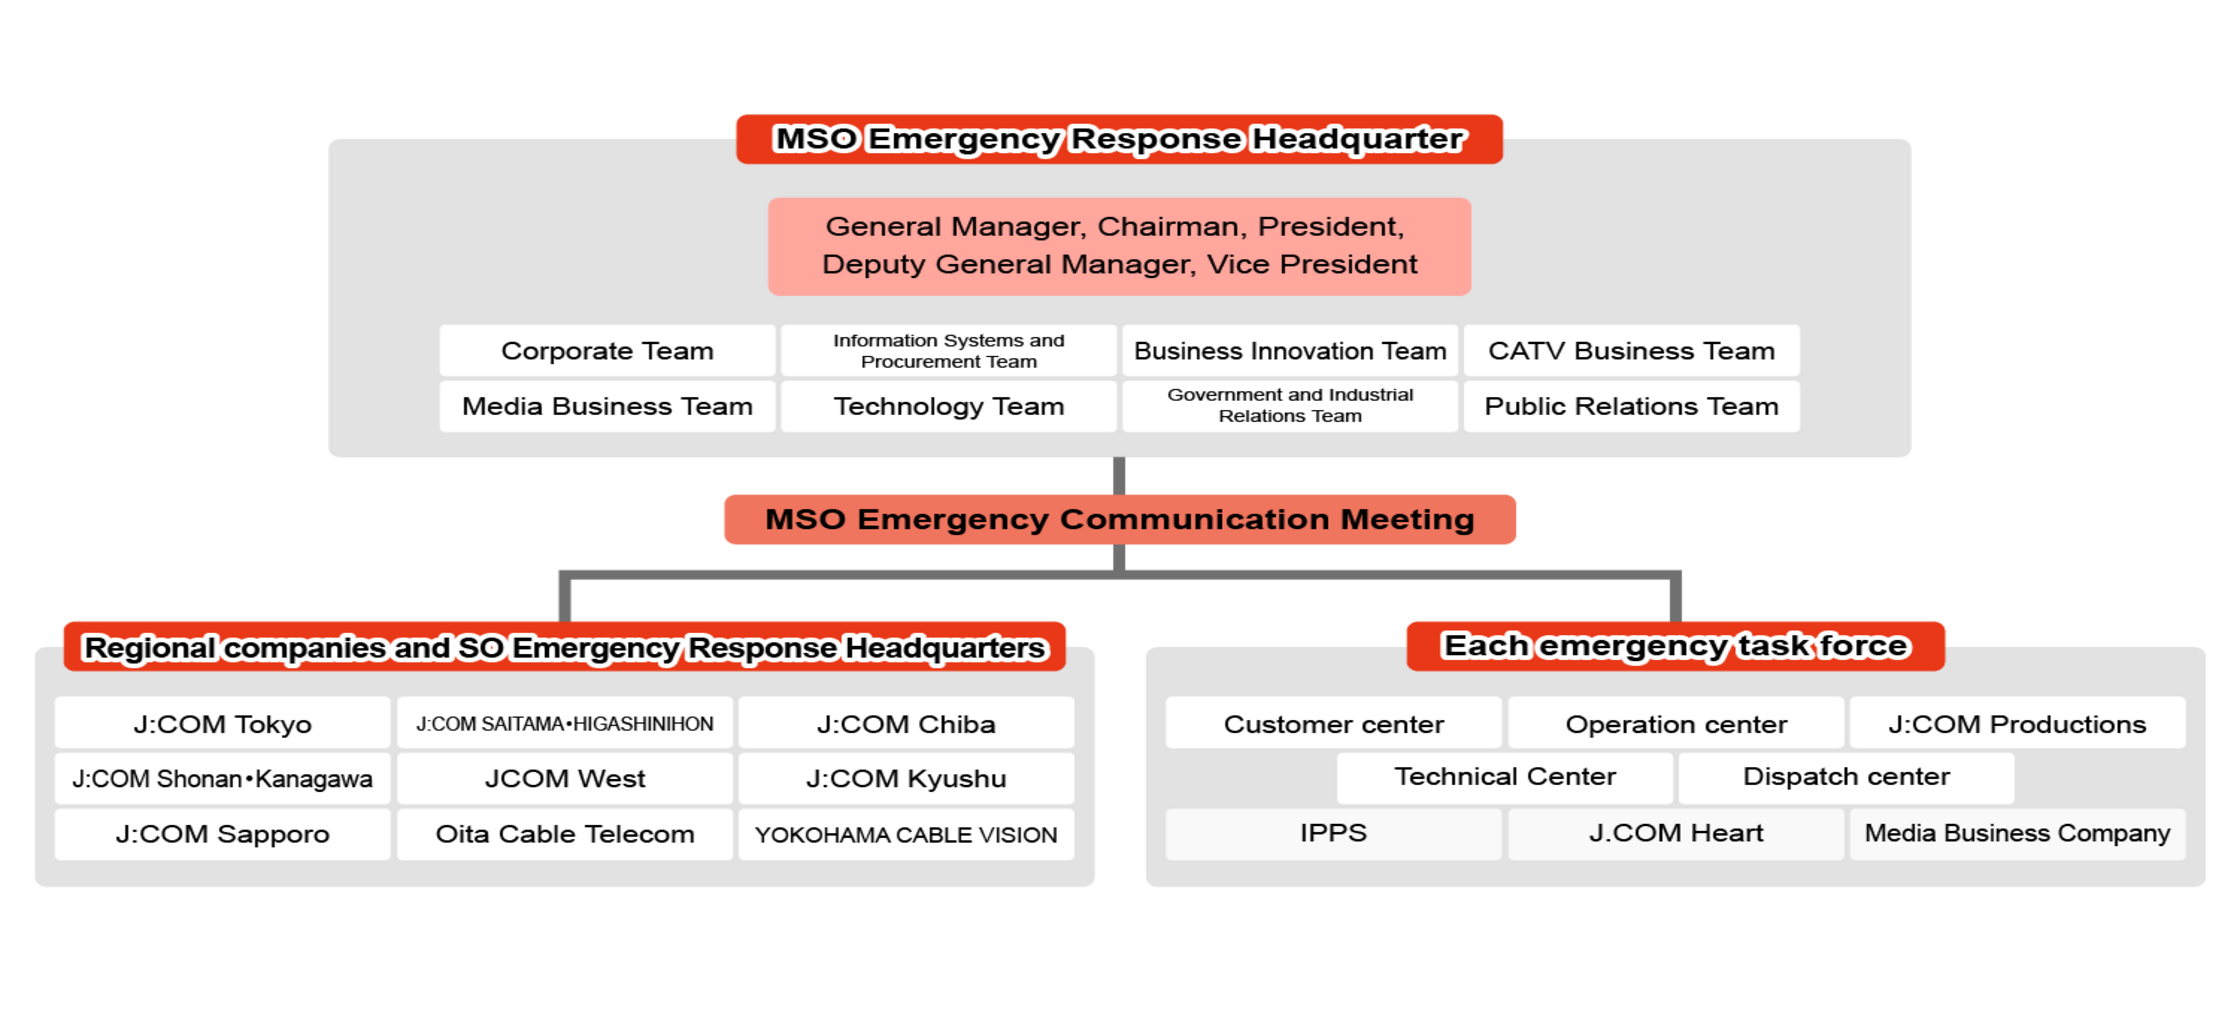 Organizational chart of J:COM emergency response headquarters